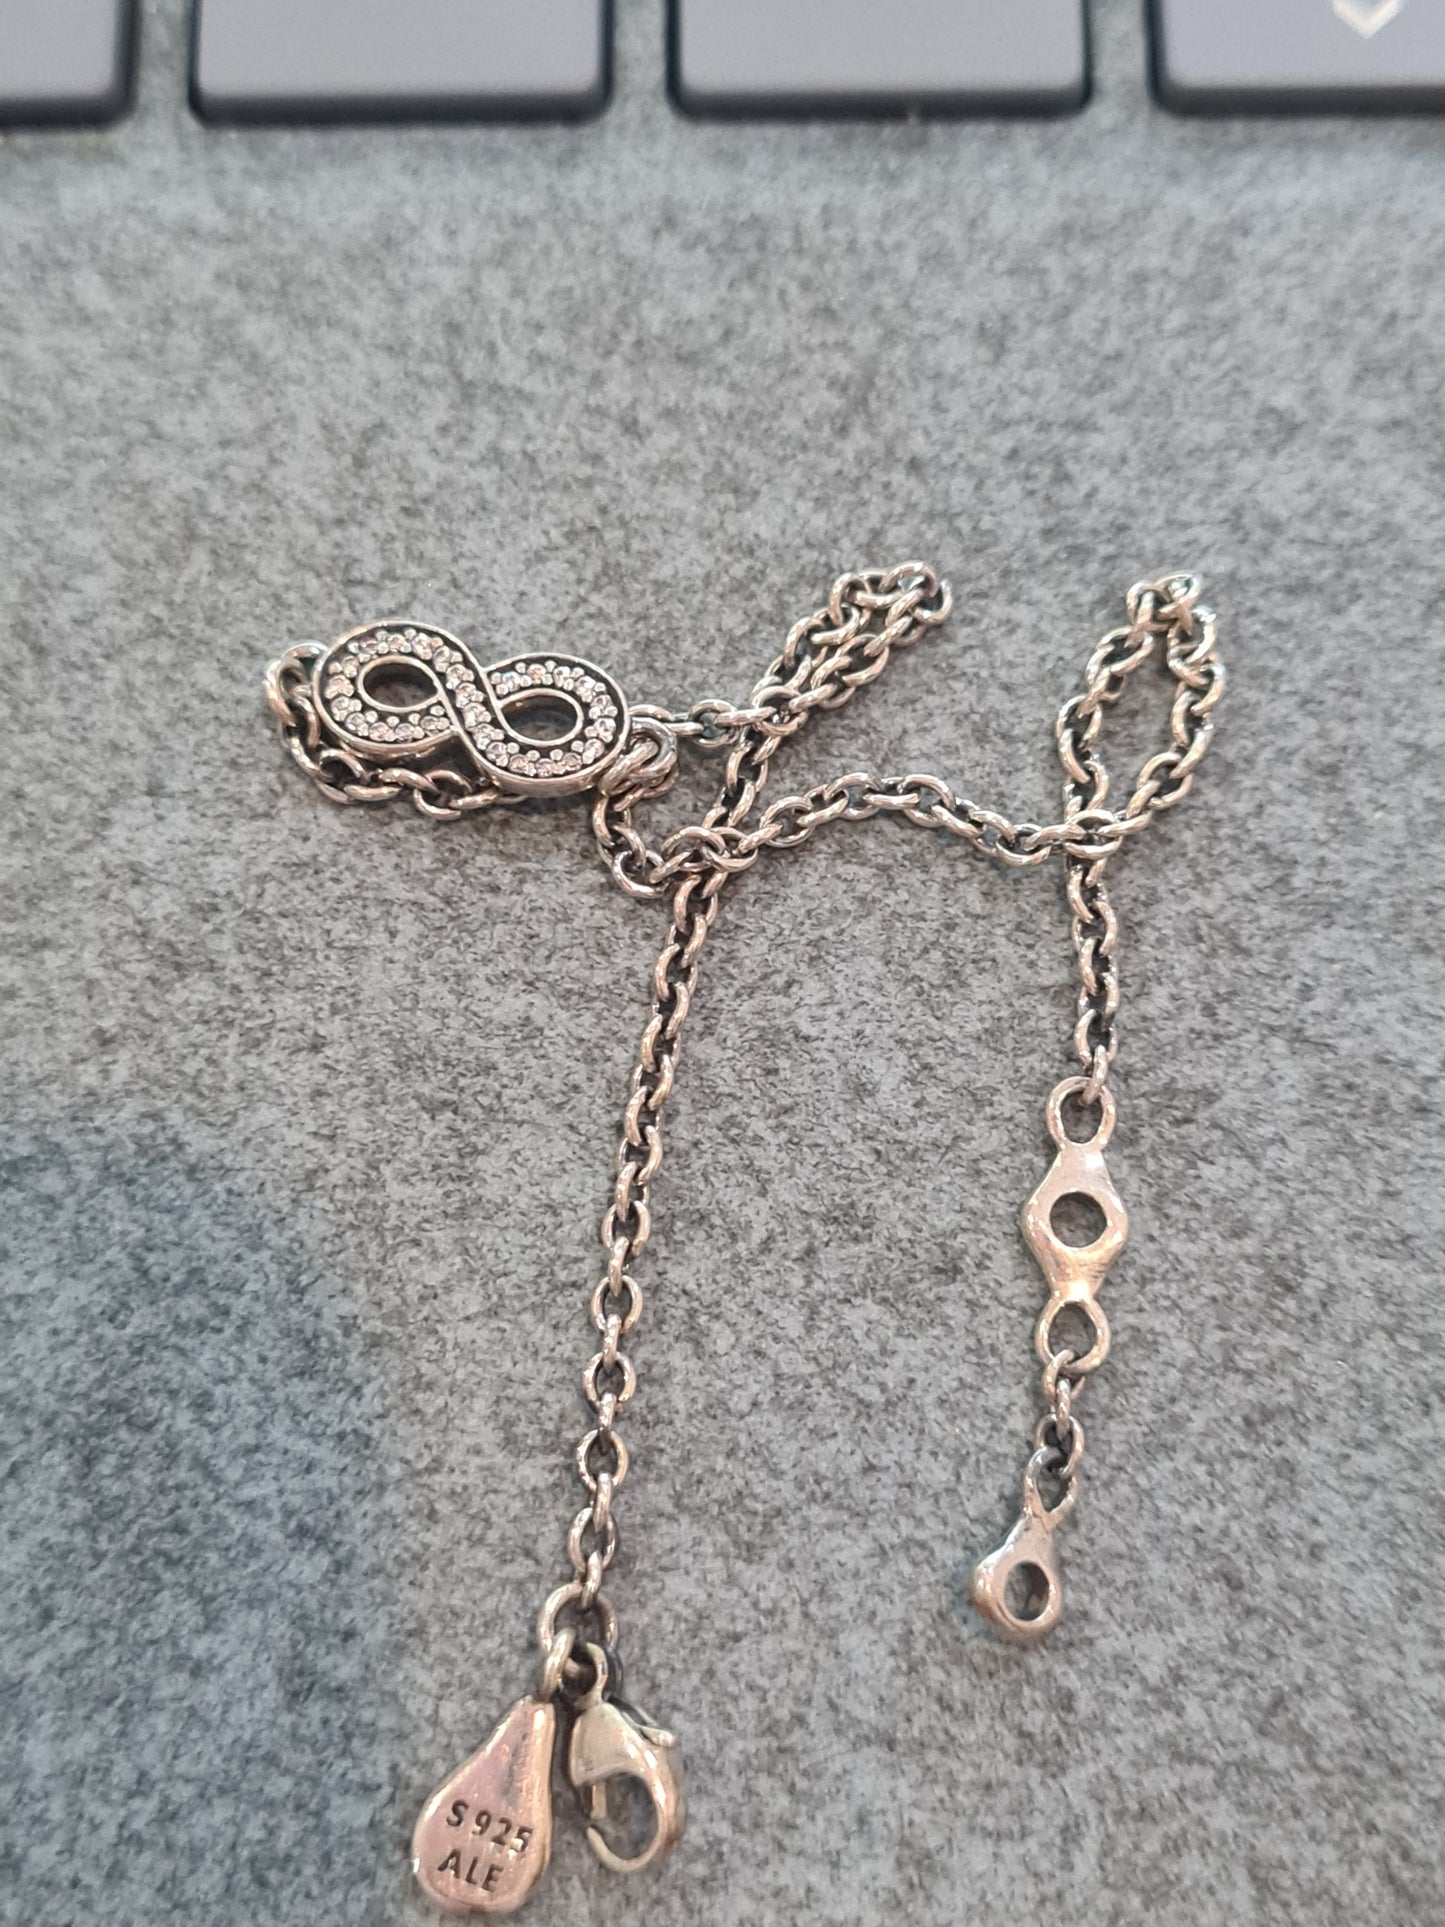 Genuine Pandora Infinity Pave Bracelet In Size 18cm on Max Adjustable Chain